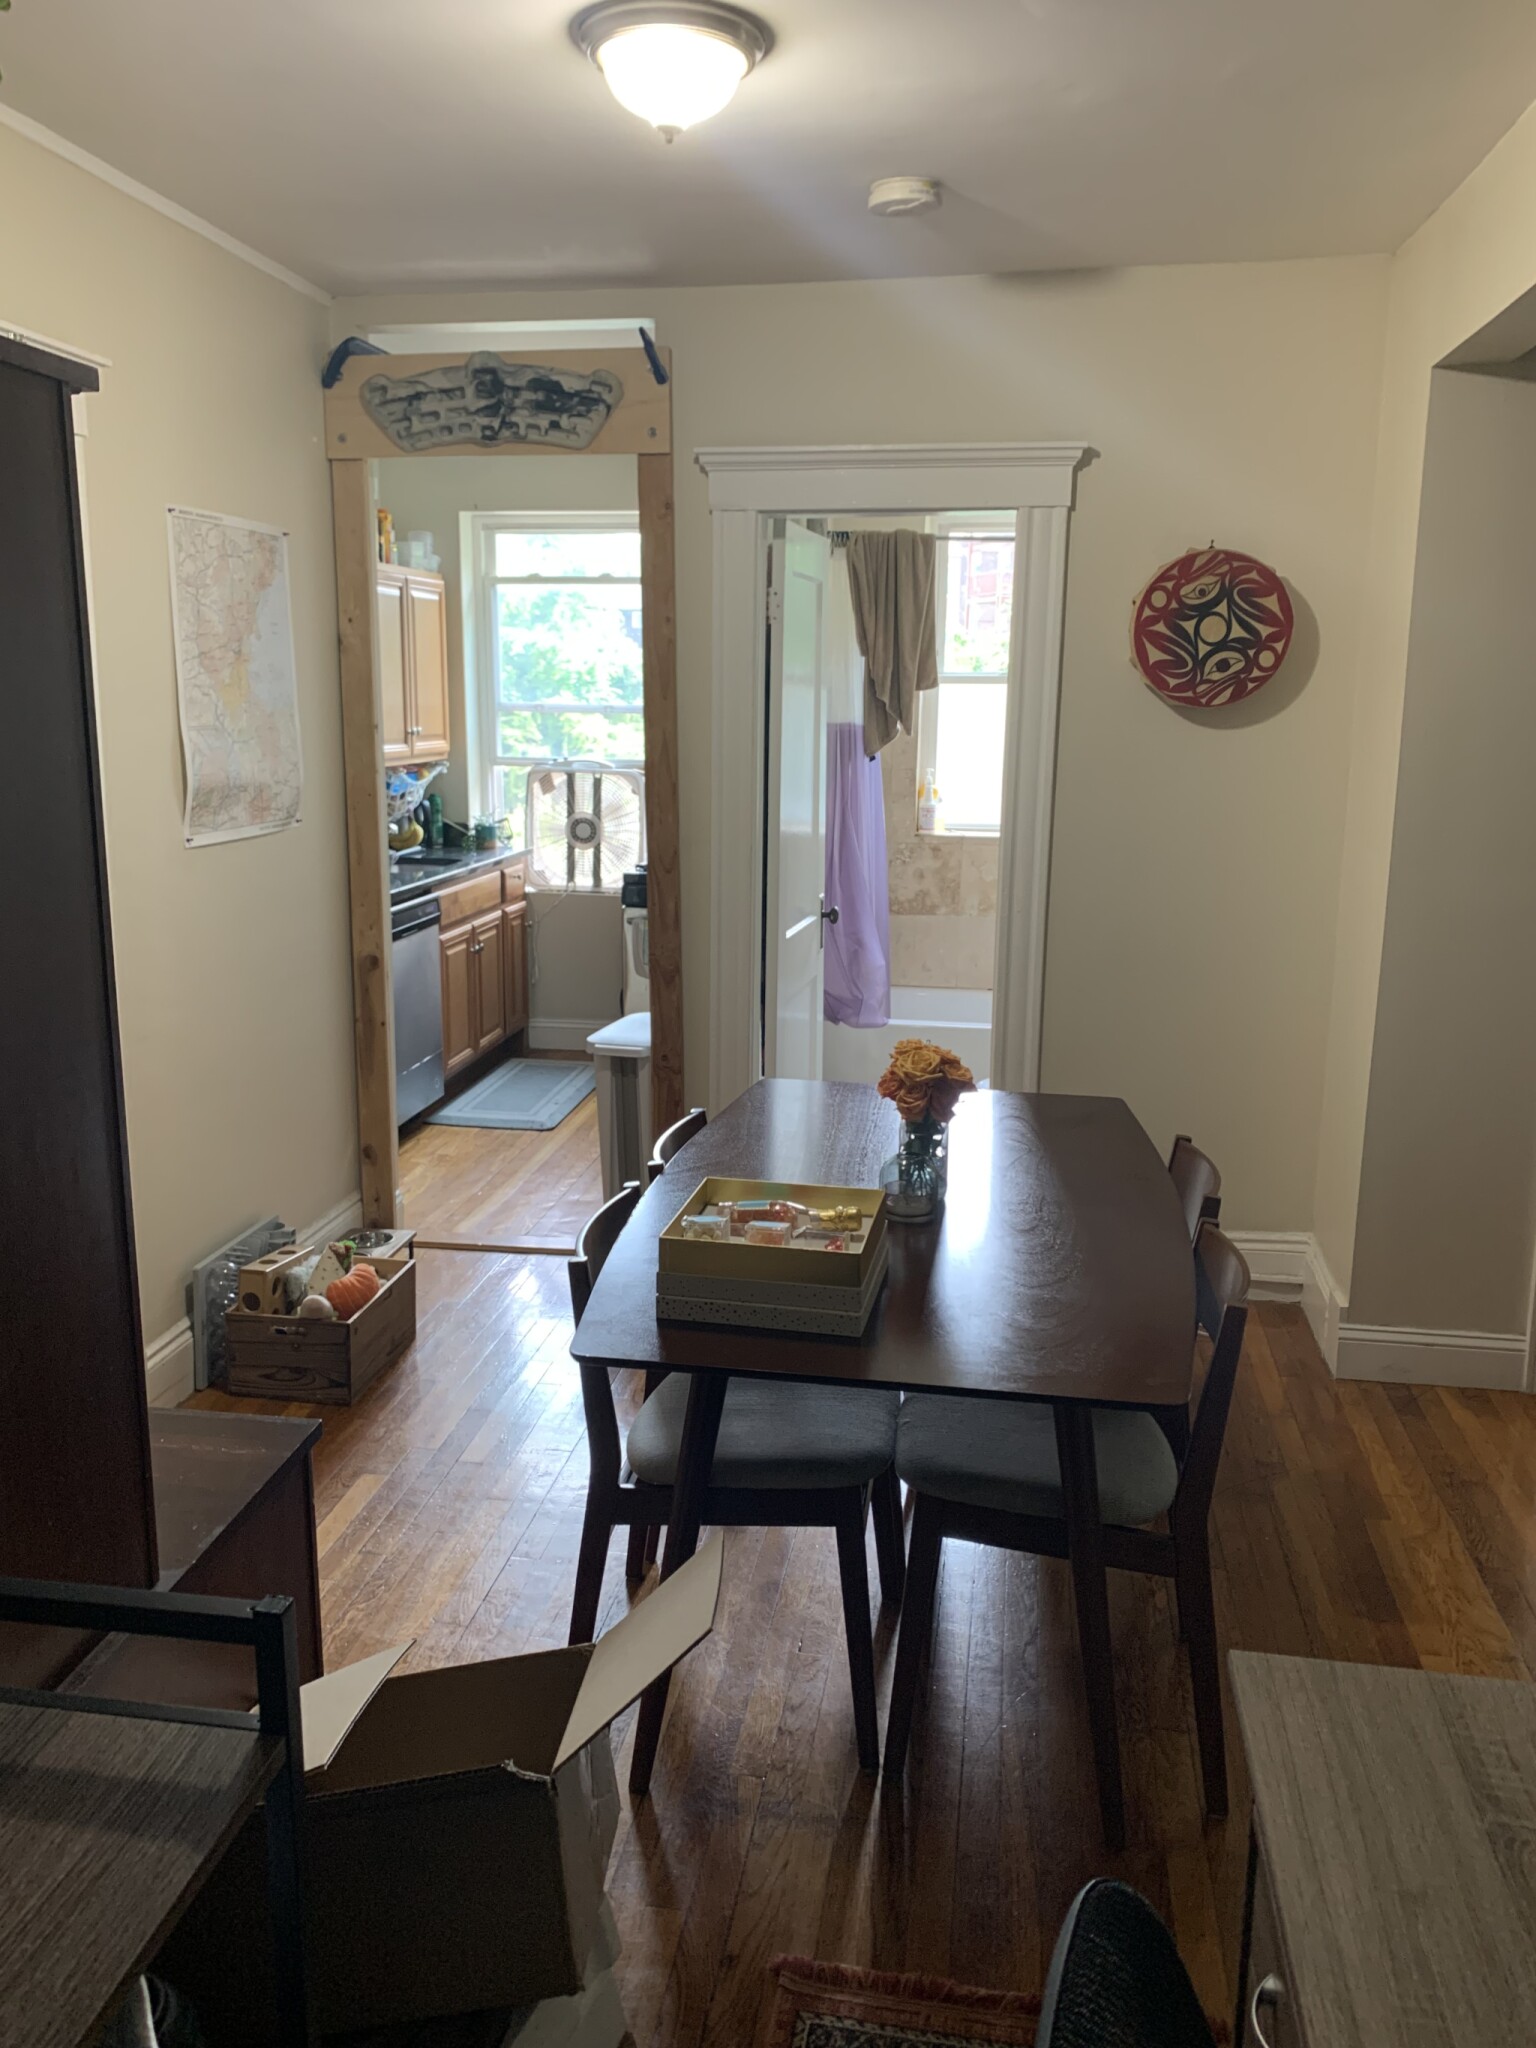 Photos of apartment on Brainerd Rd.,Boston MA 02134